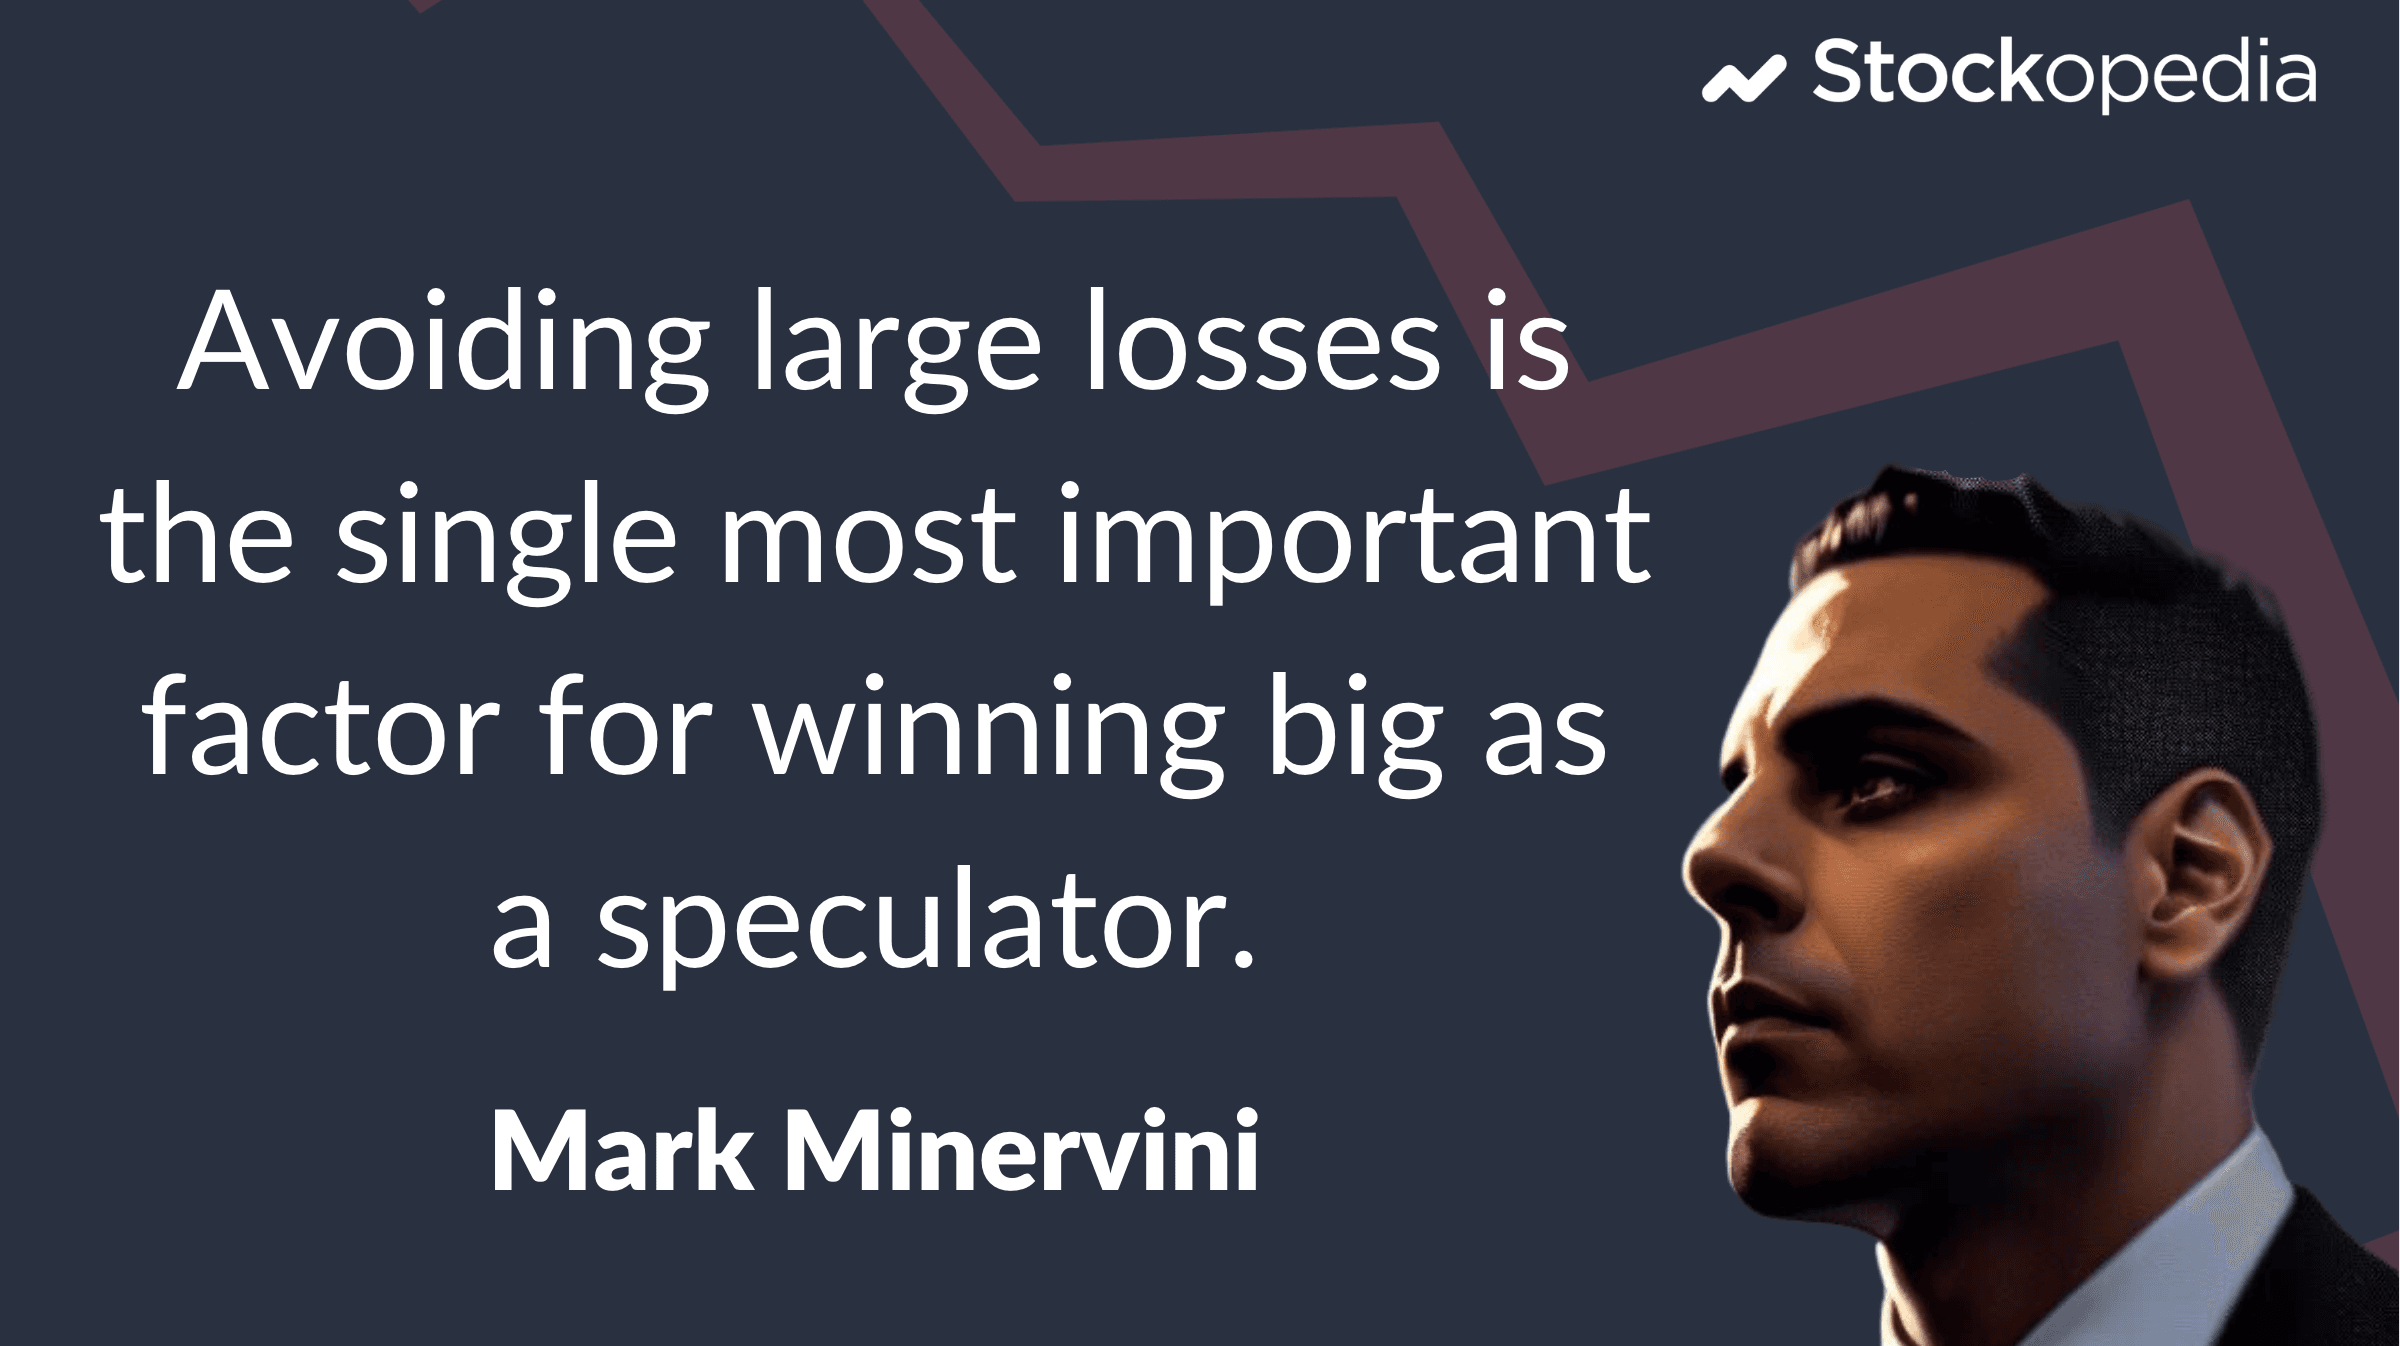 Quote - Mark Minervini - Avoiding losses for speculators